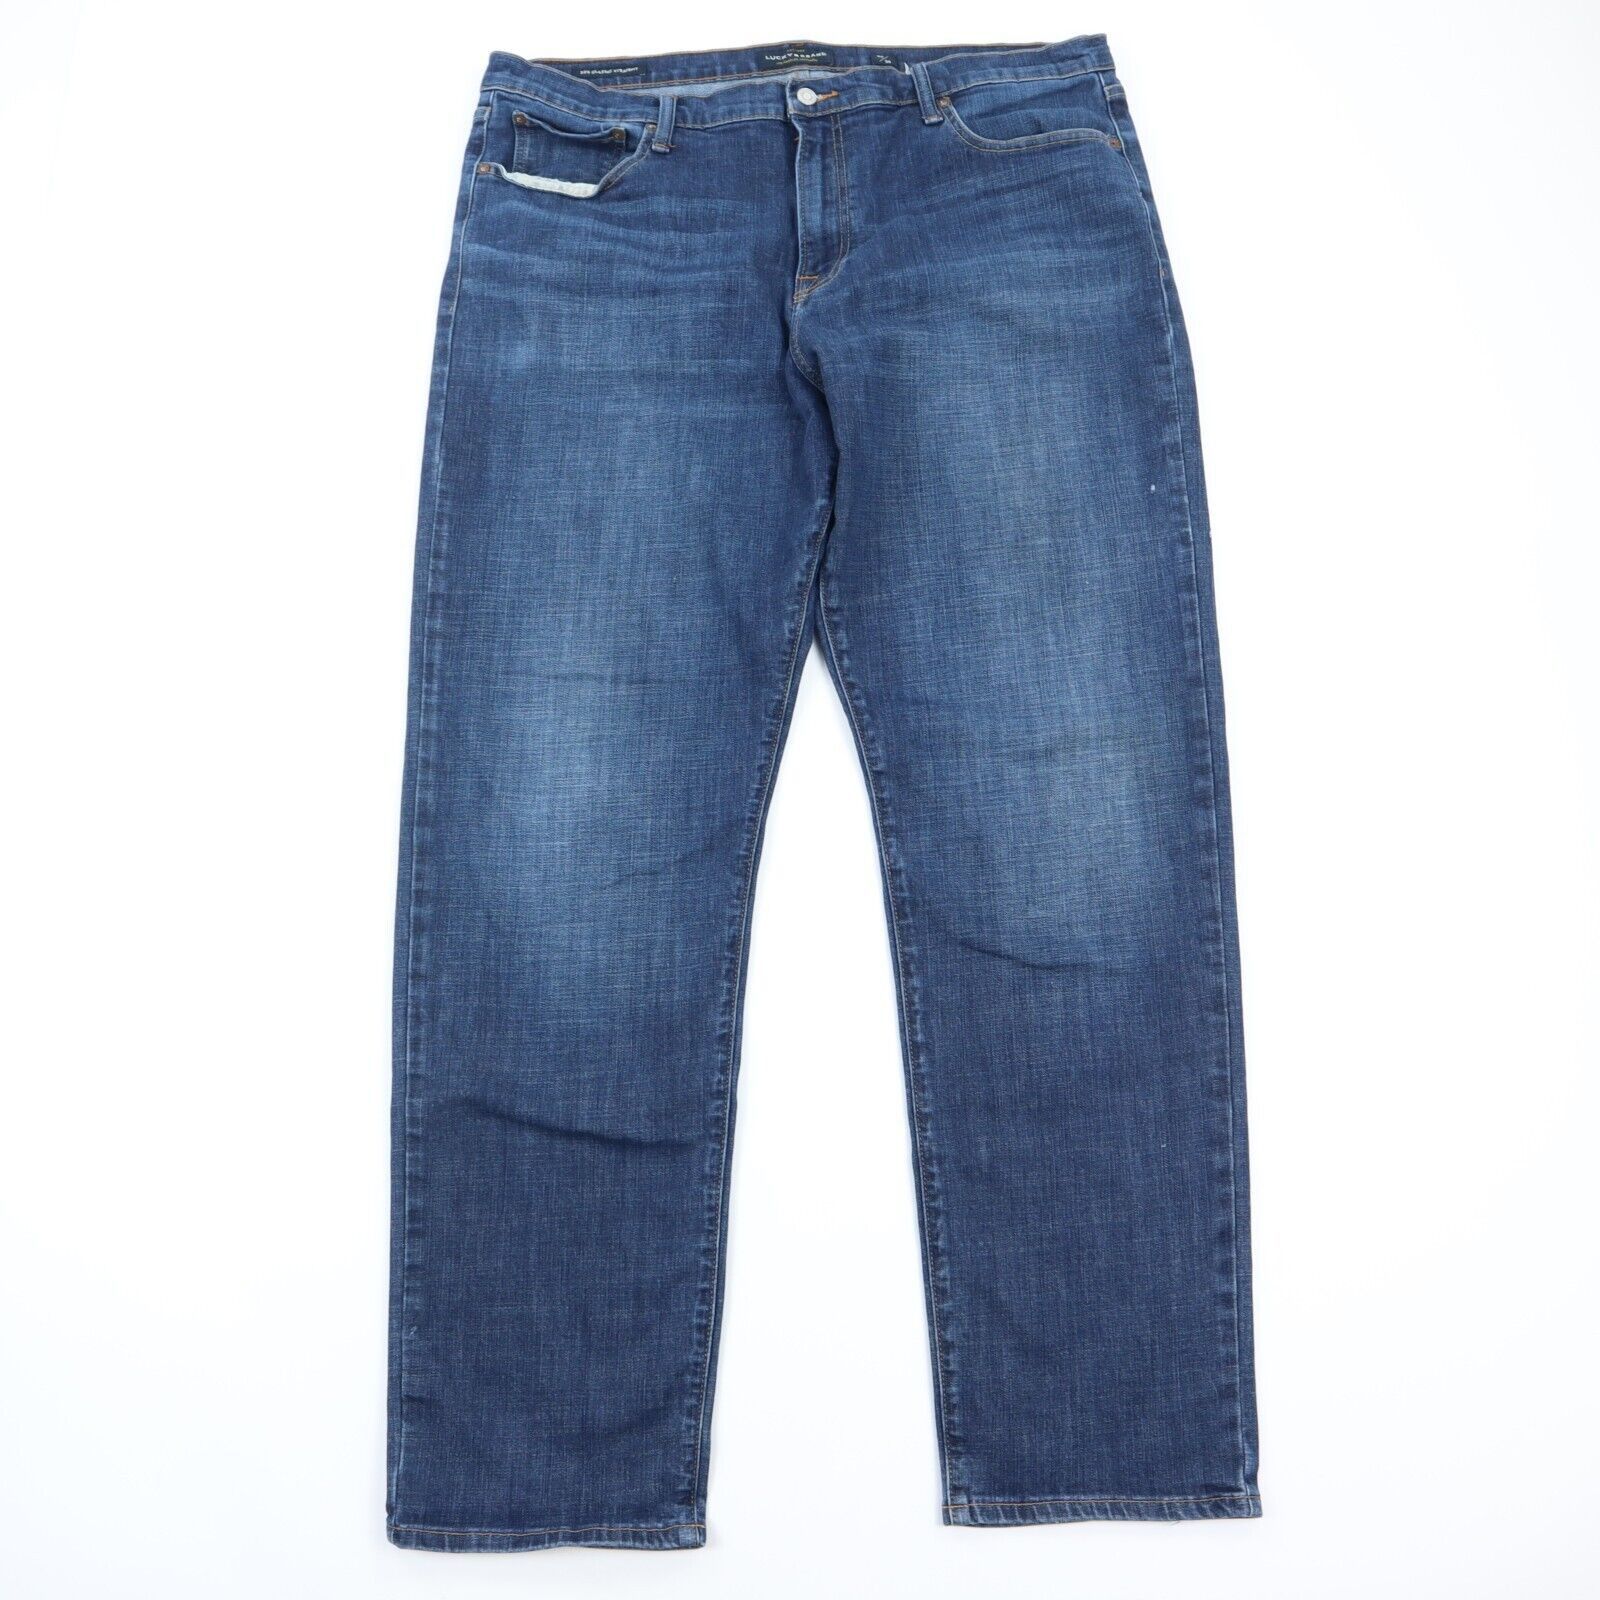 Lucky Brand 410 Athletic Slim Dark Wash Jeans Size Men's 40x34